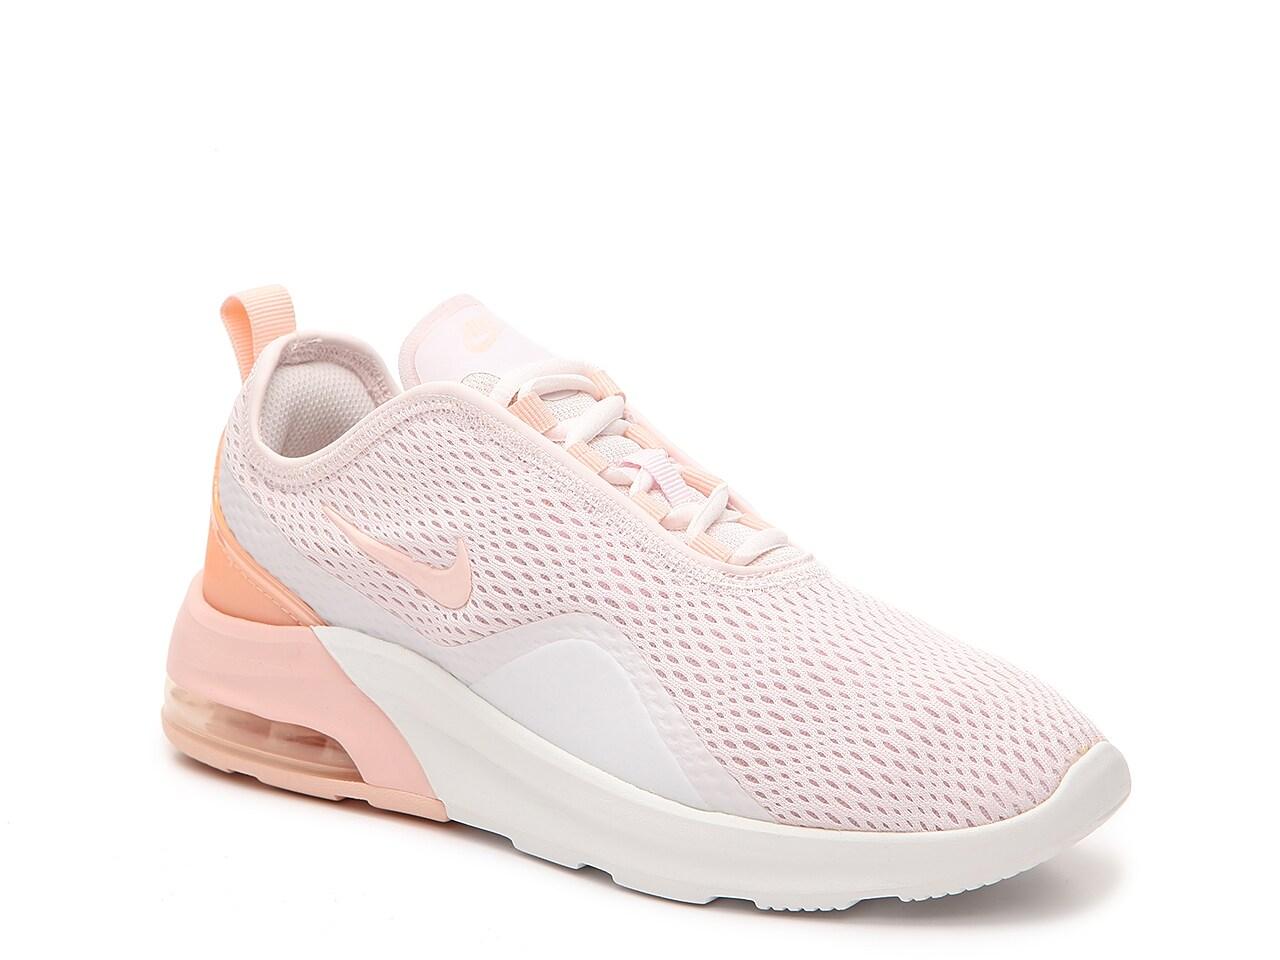 sammensnøret Med det samme Konsekvent Nike Synthetic Air Max Motion 2 Sneaker in Pale Pink/White (Pink) - Lyst